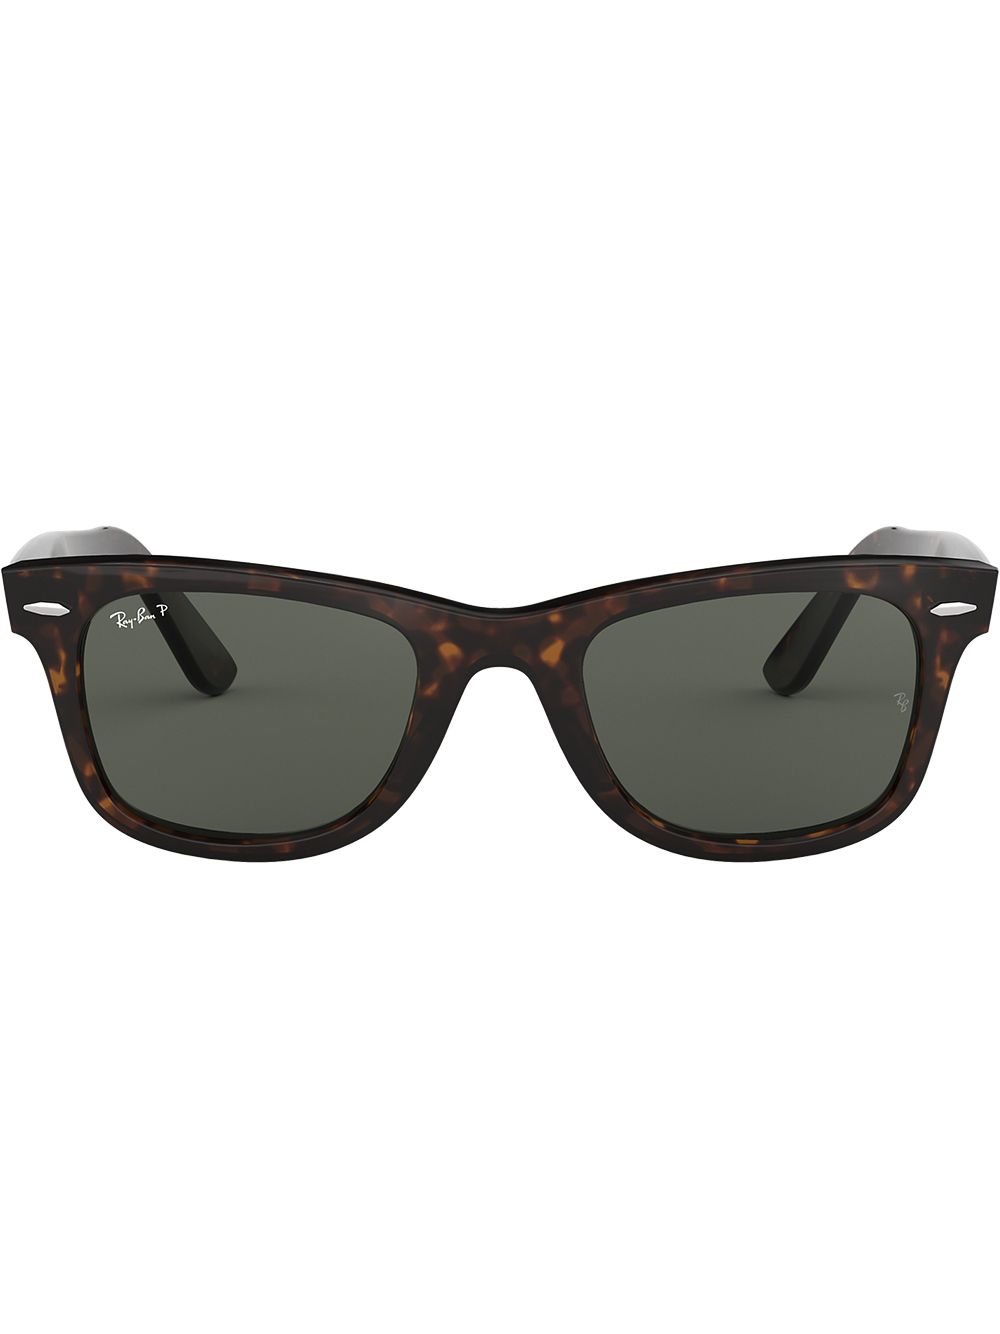 Image 1 of Ray-Ban Original Wayfarer Classic sunglasses